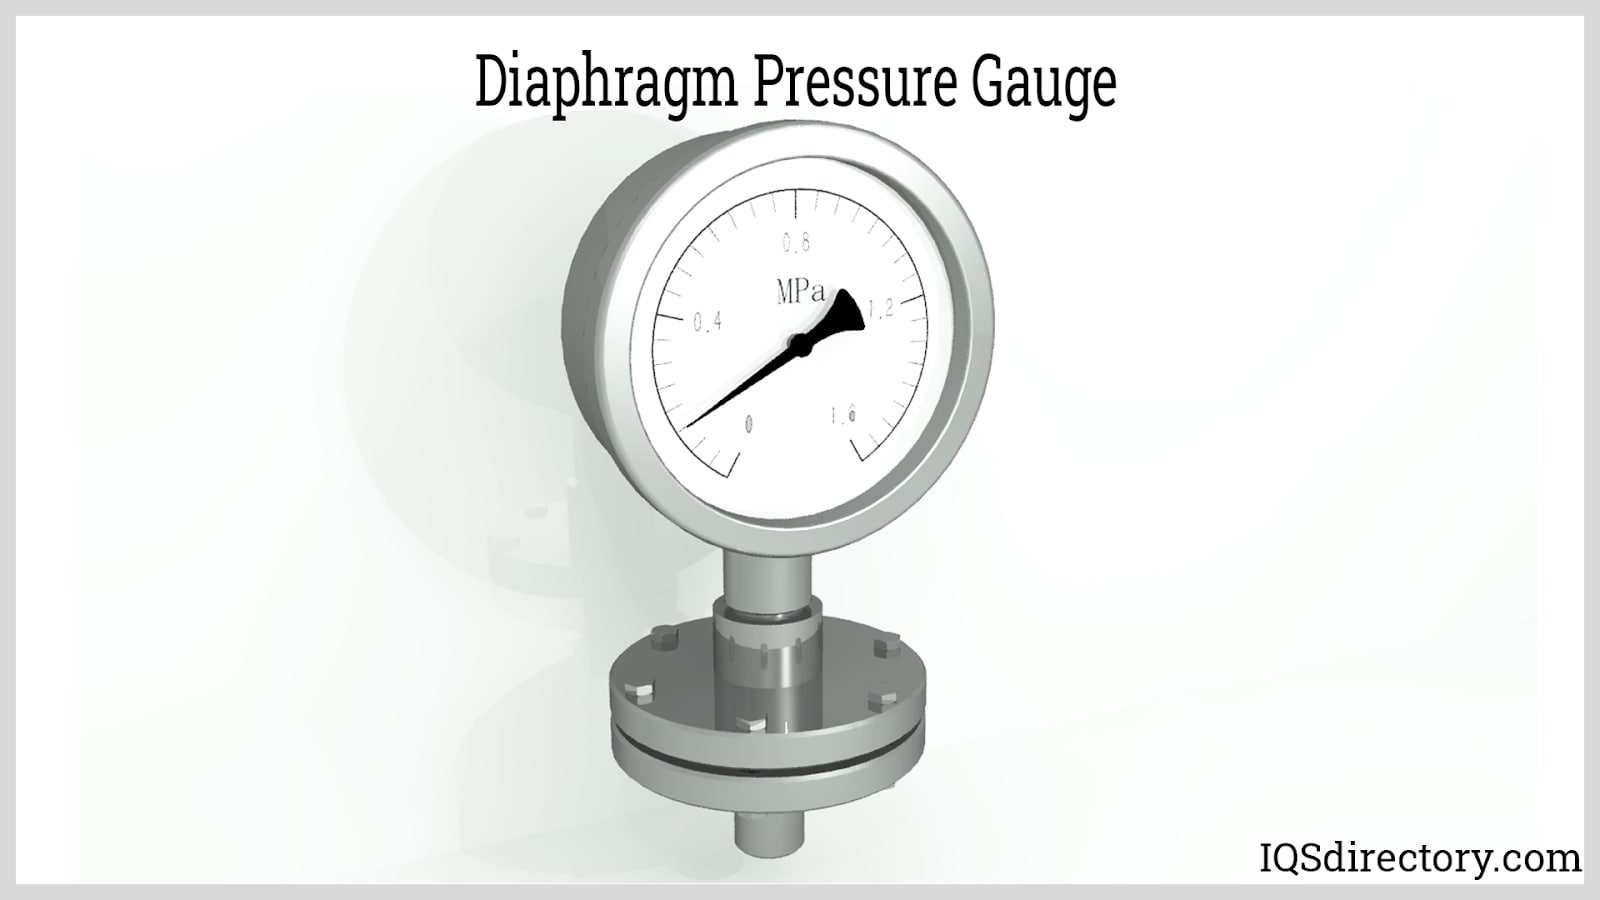 https://www.iqsdirectory.com/articles/pressure-gauge/diaphragm-pressure-gauge.jpg